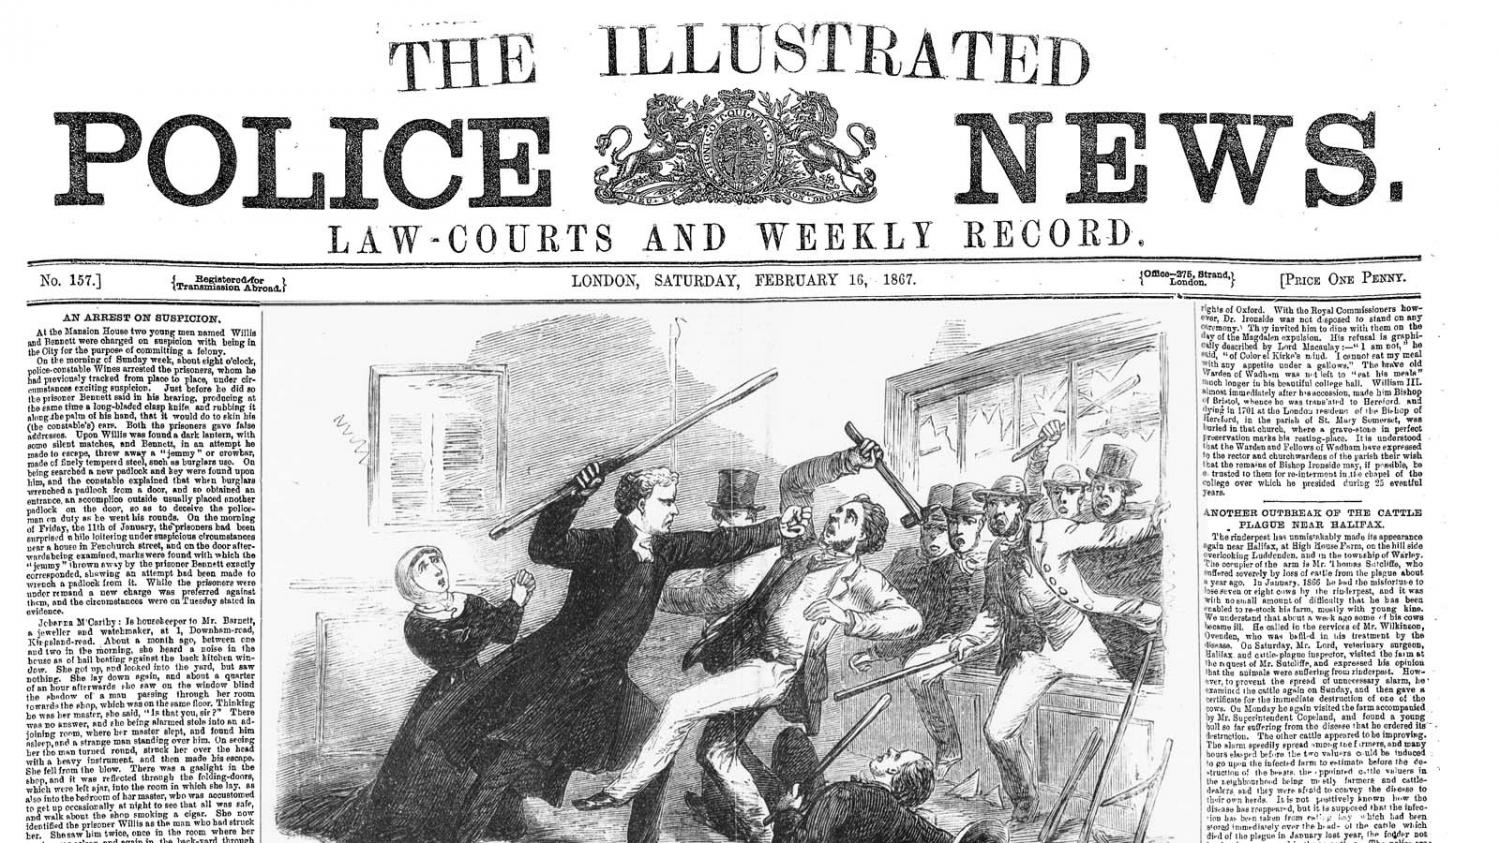 History of nineteenth-century periodical illustration - Nineteenth